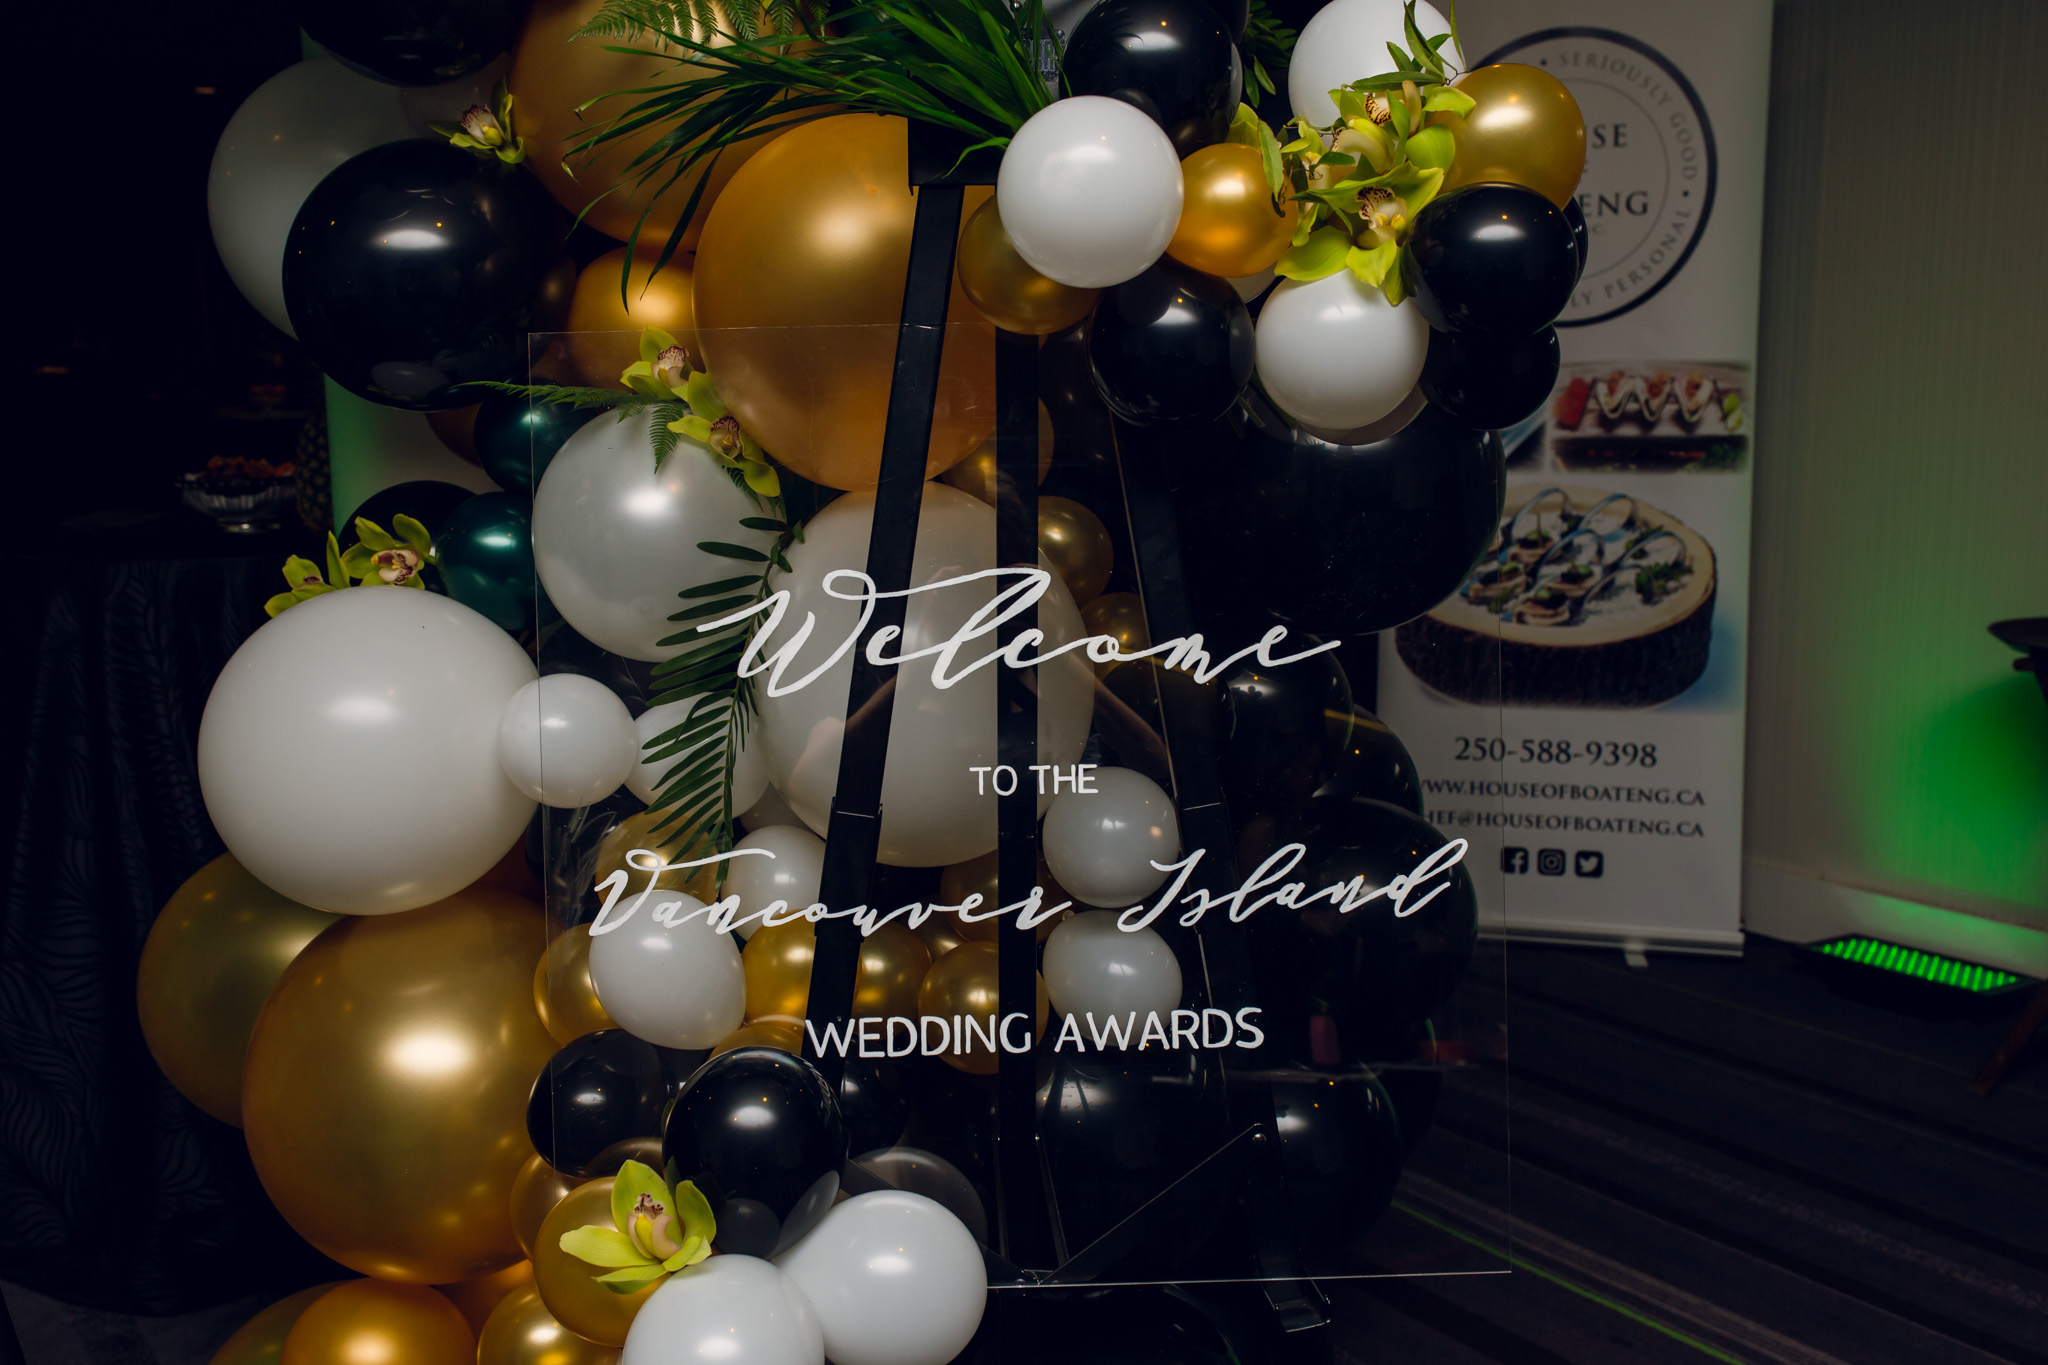 Vancouver Island Wedding Awards Delta Hotels By Marriott Ocean Pointe Resort Victoria Gala Spark & Whimsy Photography West Coast Weddings Magazine